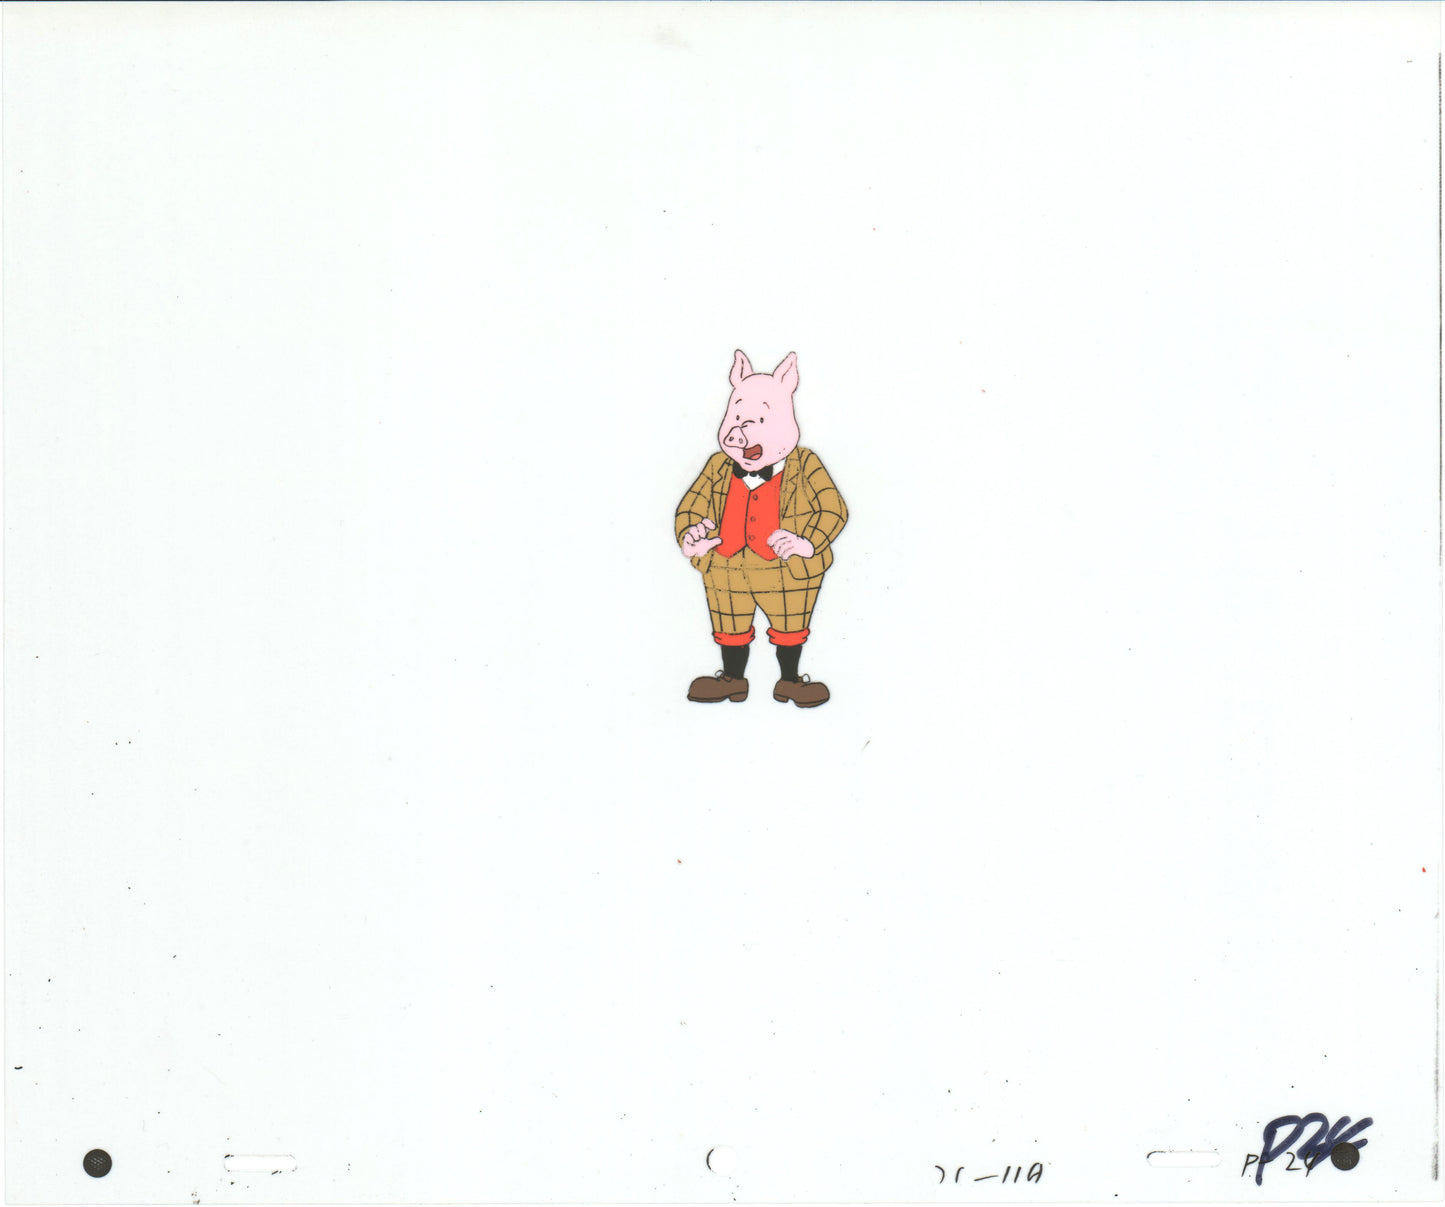 RUPERT Bear Podgy Pig Original Production Animation Cel from the Cartoon by Nelvana Tourtel Animation 1990s 8-322